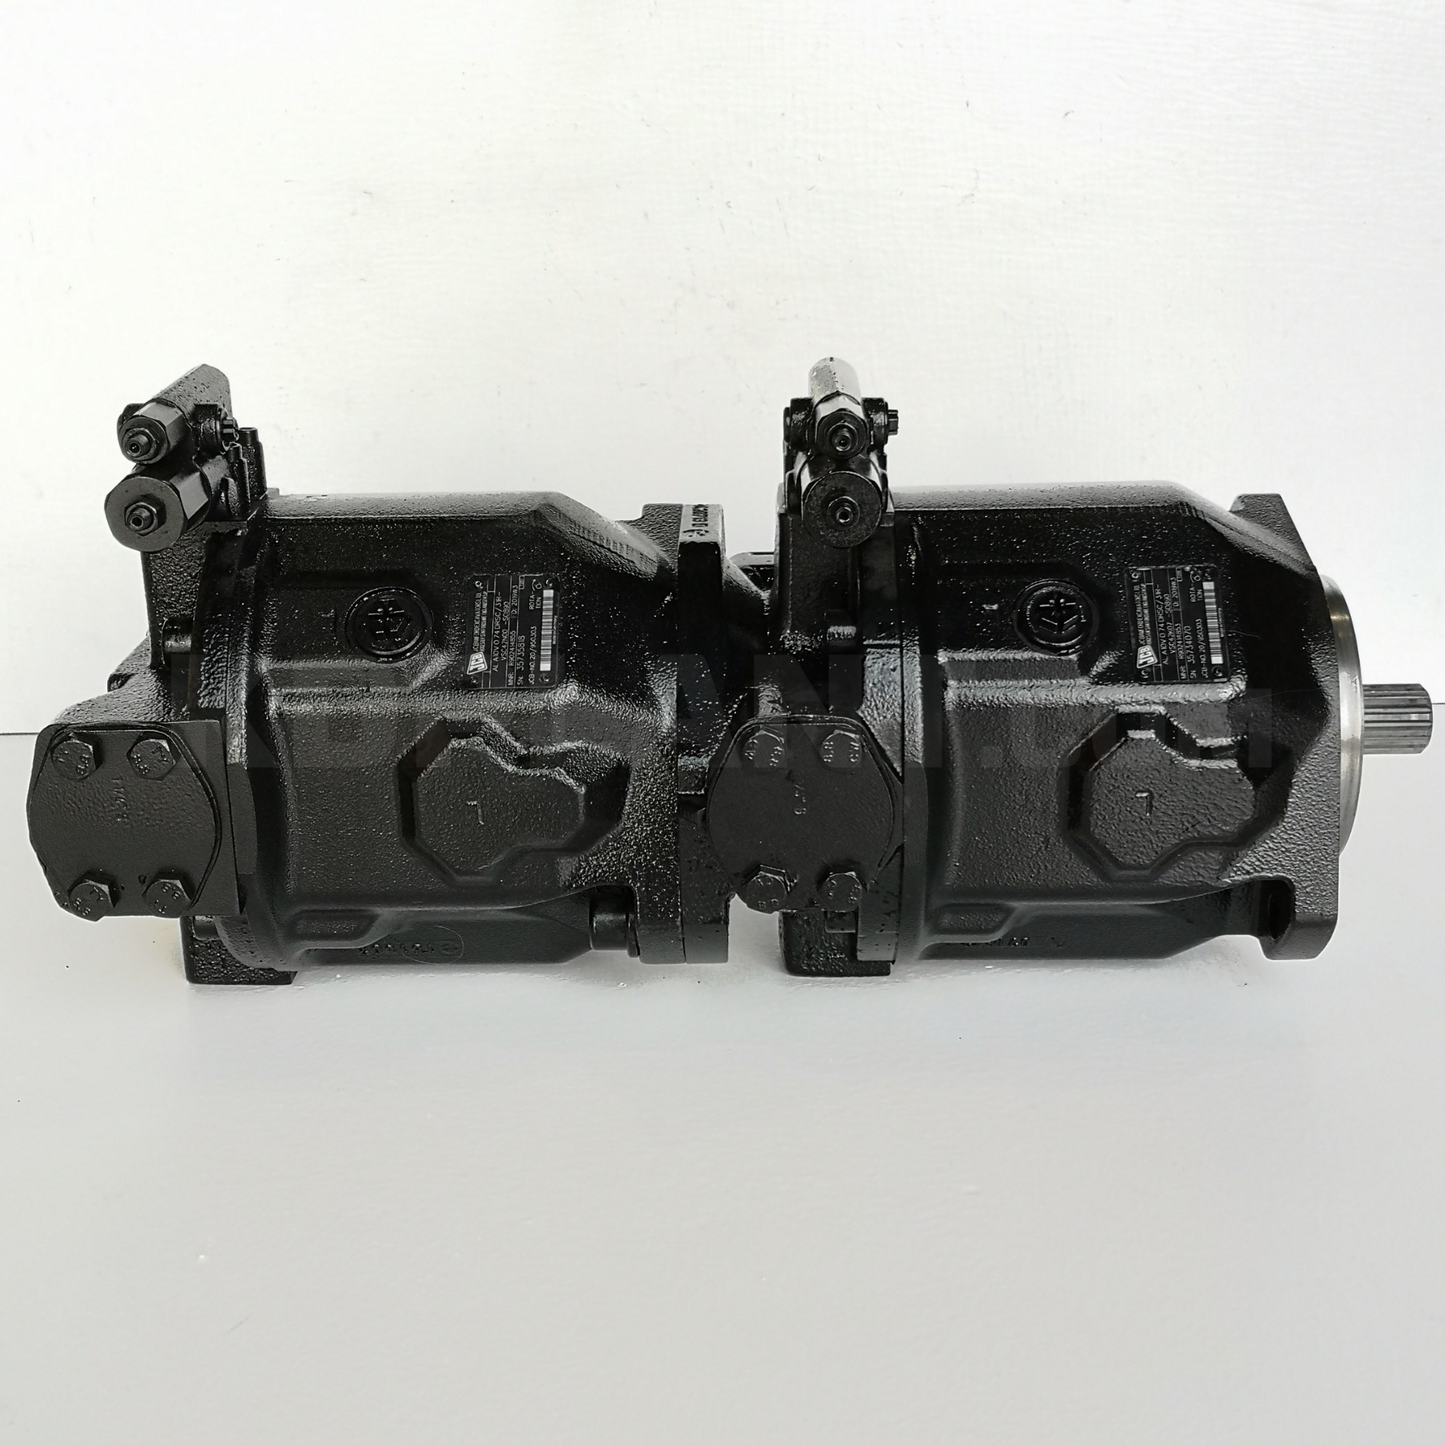 New JCB 456 Hydraulic Pump | 20/950303